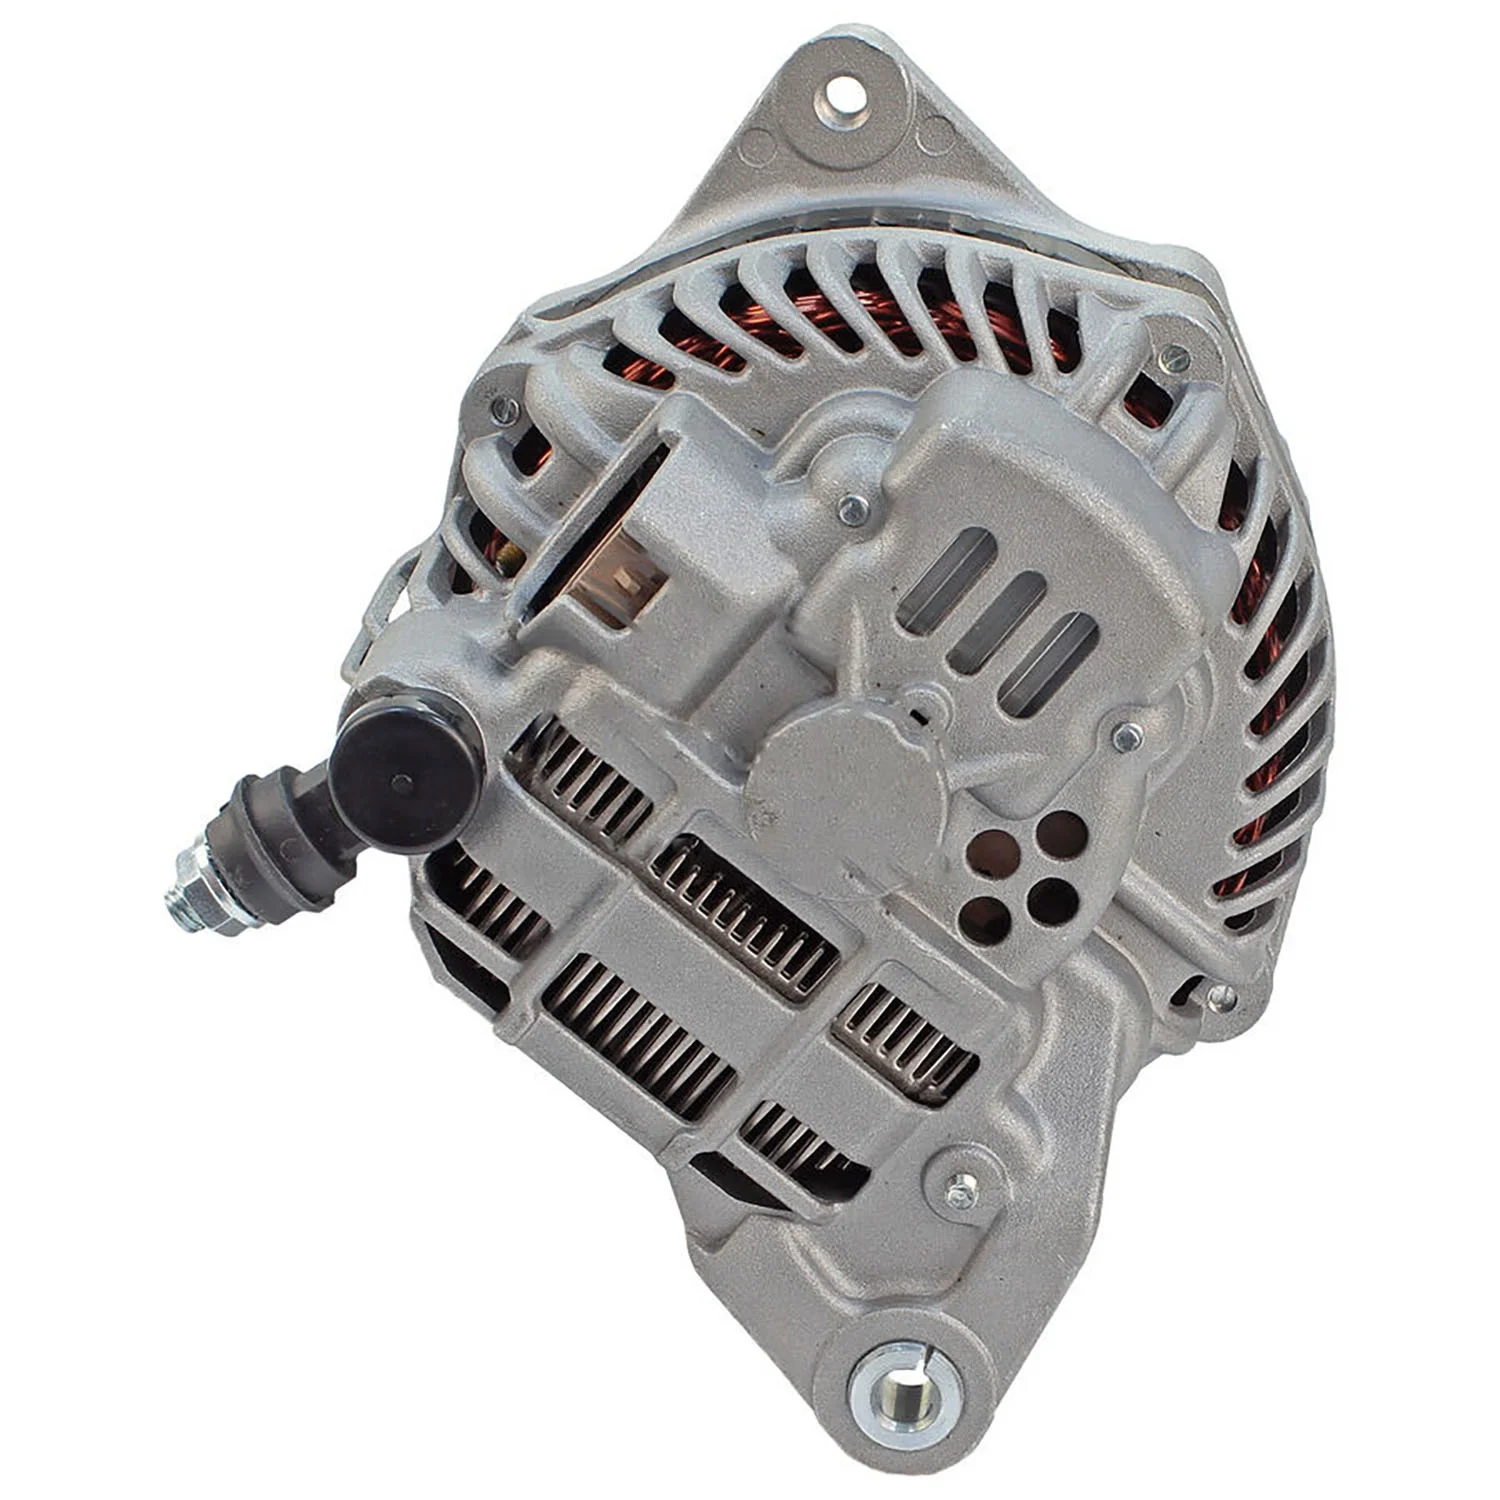 

Auto Dynamo Alternator Generator For Delco Hitachi Lucas Mitsubishi 115453 CAL35183 CAL35183AS CAL35183ES CAL35183OS CAL35183RS